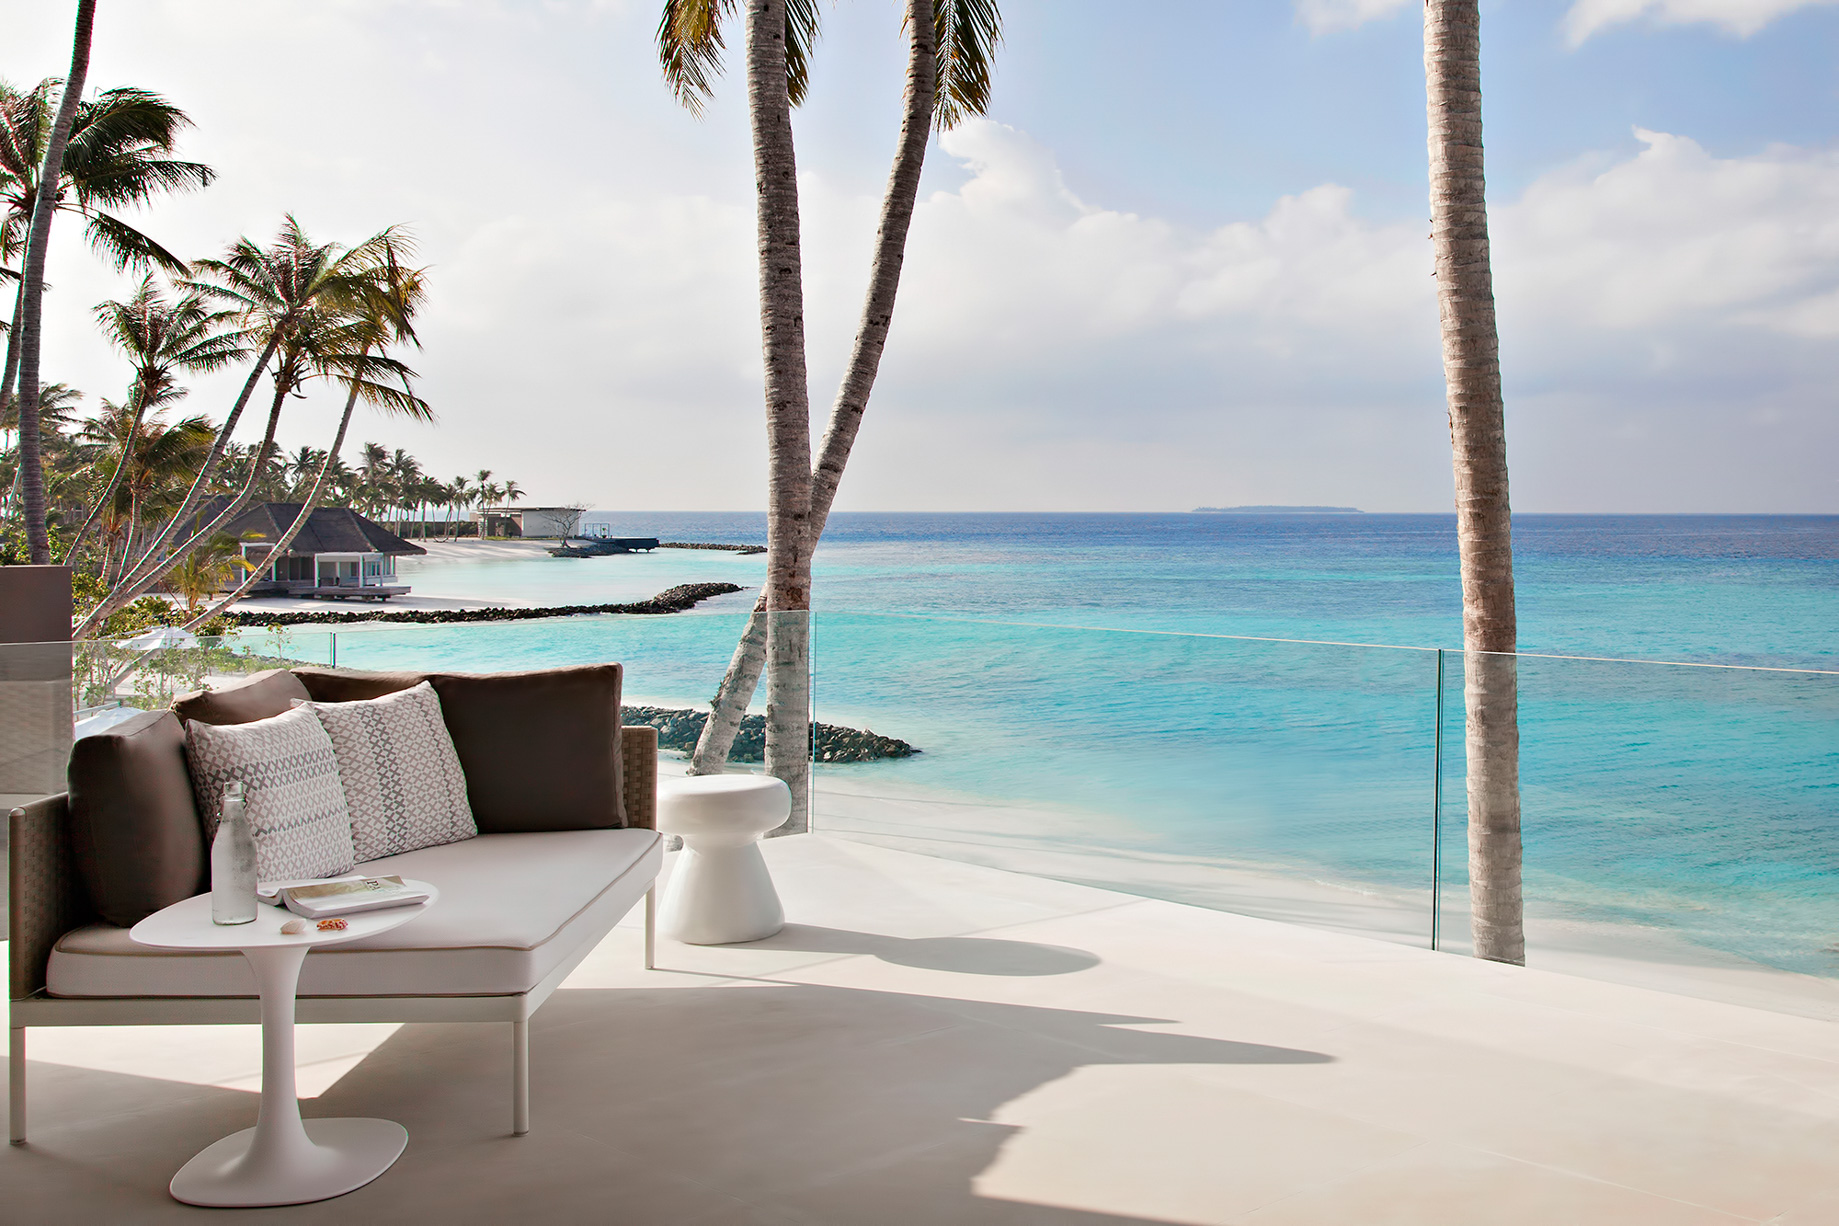 Cheval Blanc Randheli Resort - Noonu Atoll, Maldives - Private Island Terrace